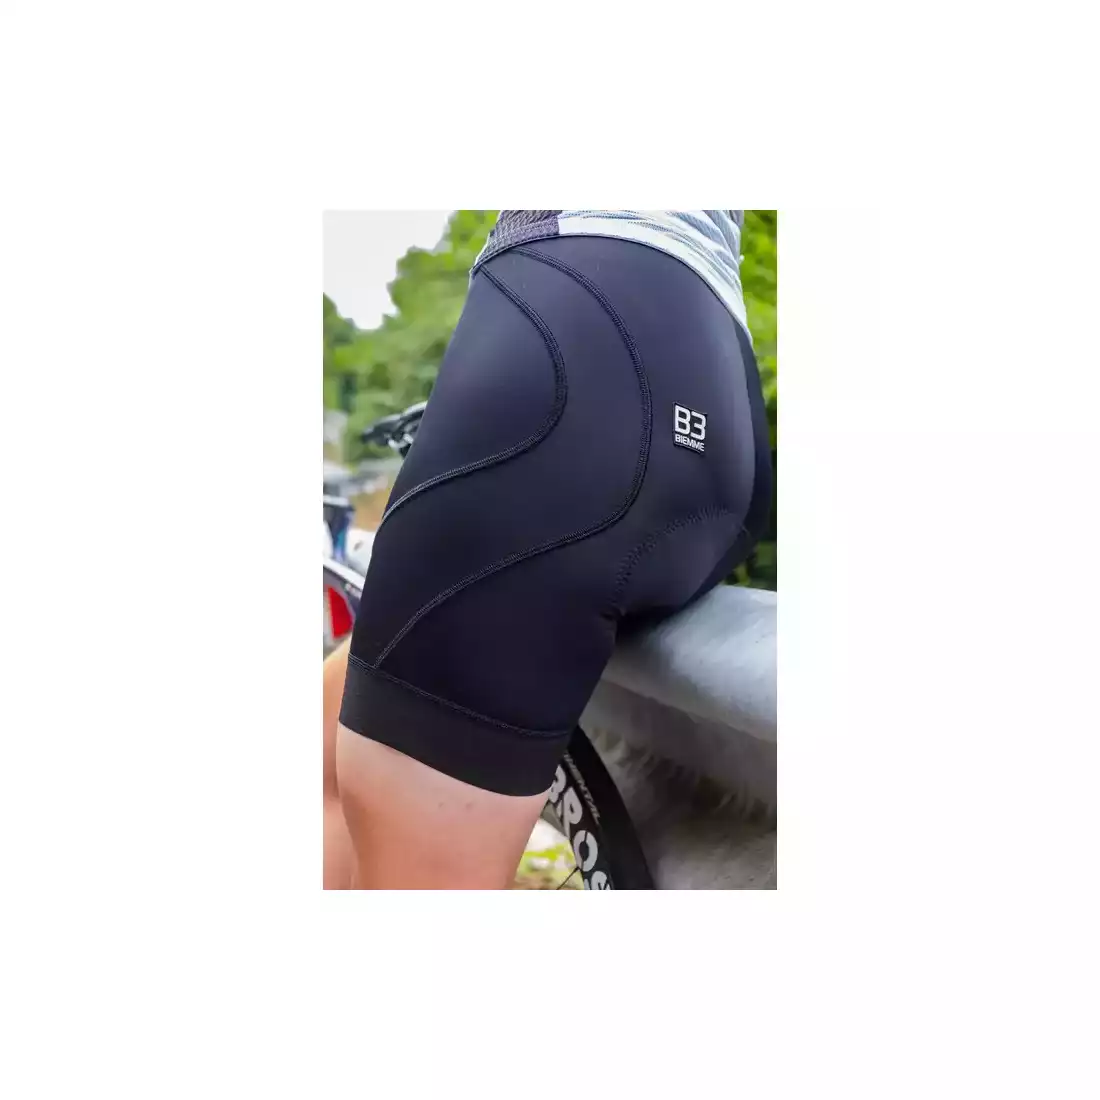 Biemme VUELTA 2.0 Lady women's cycling shorts with an insert, black